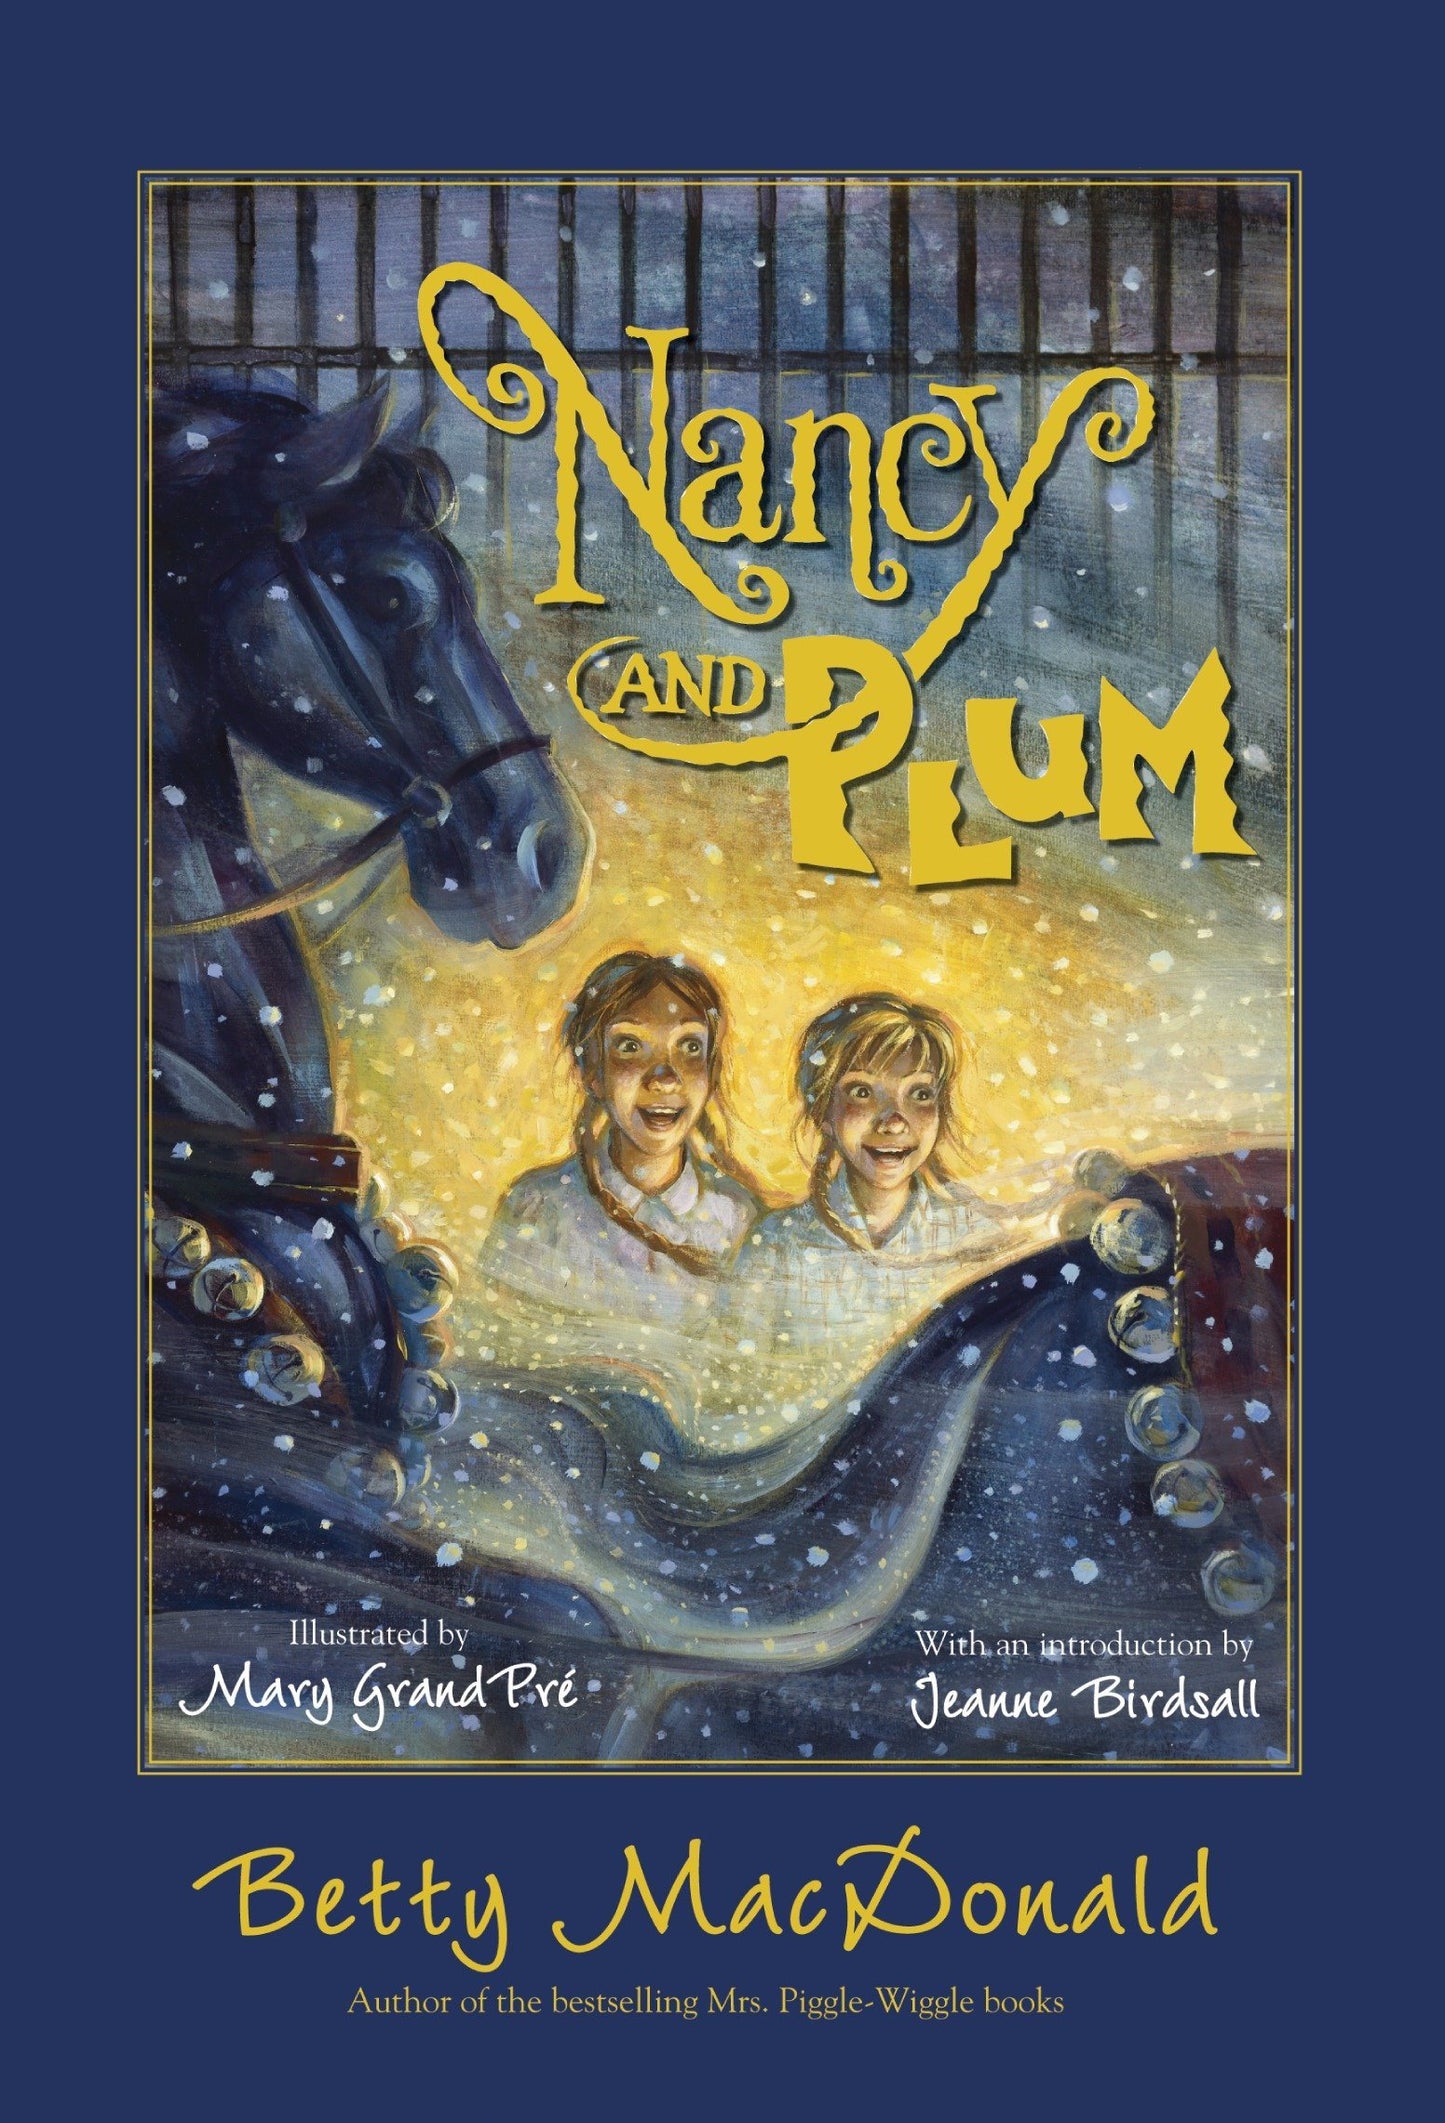 Nancy and Plum (MacDonald - paperback)